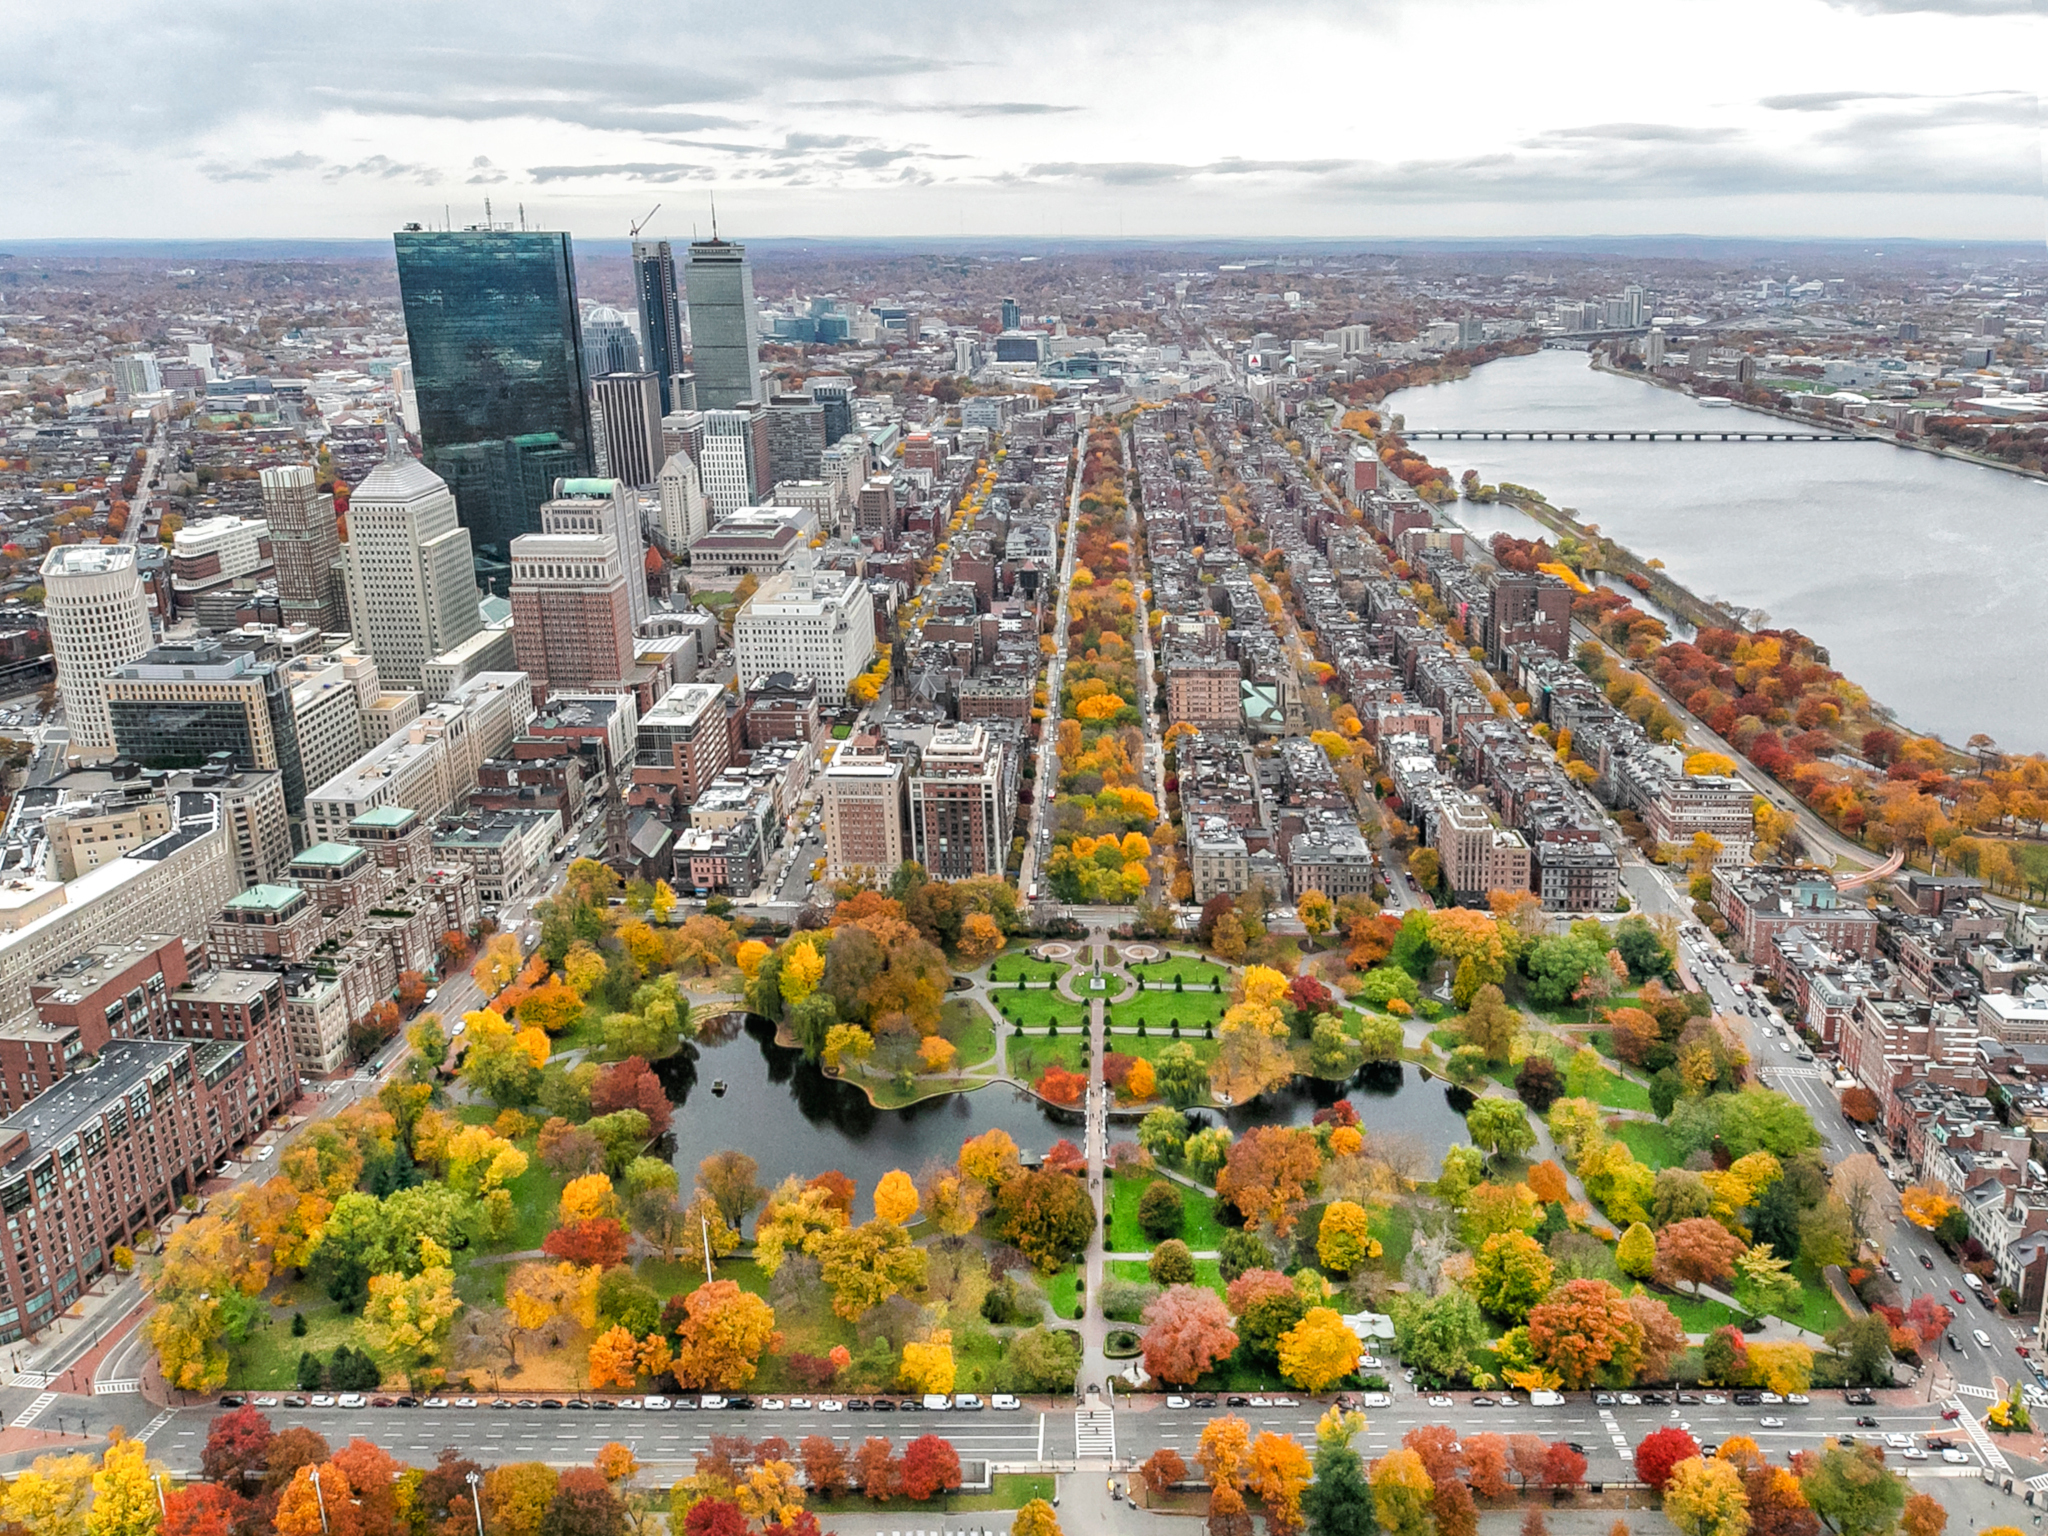 fall foliage trips from boston